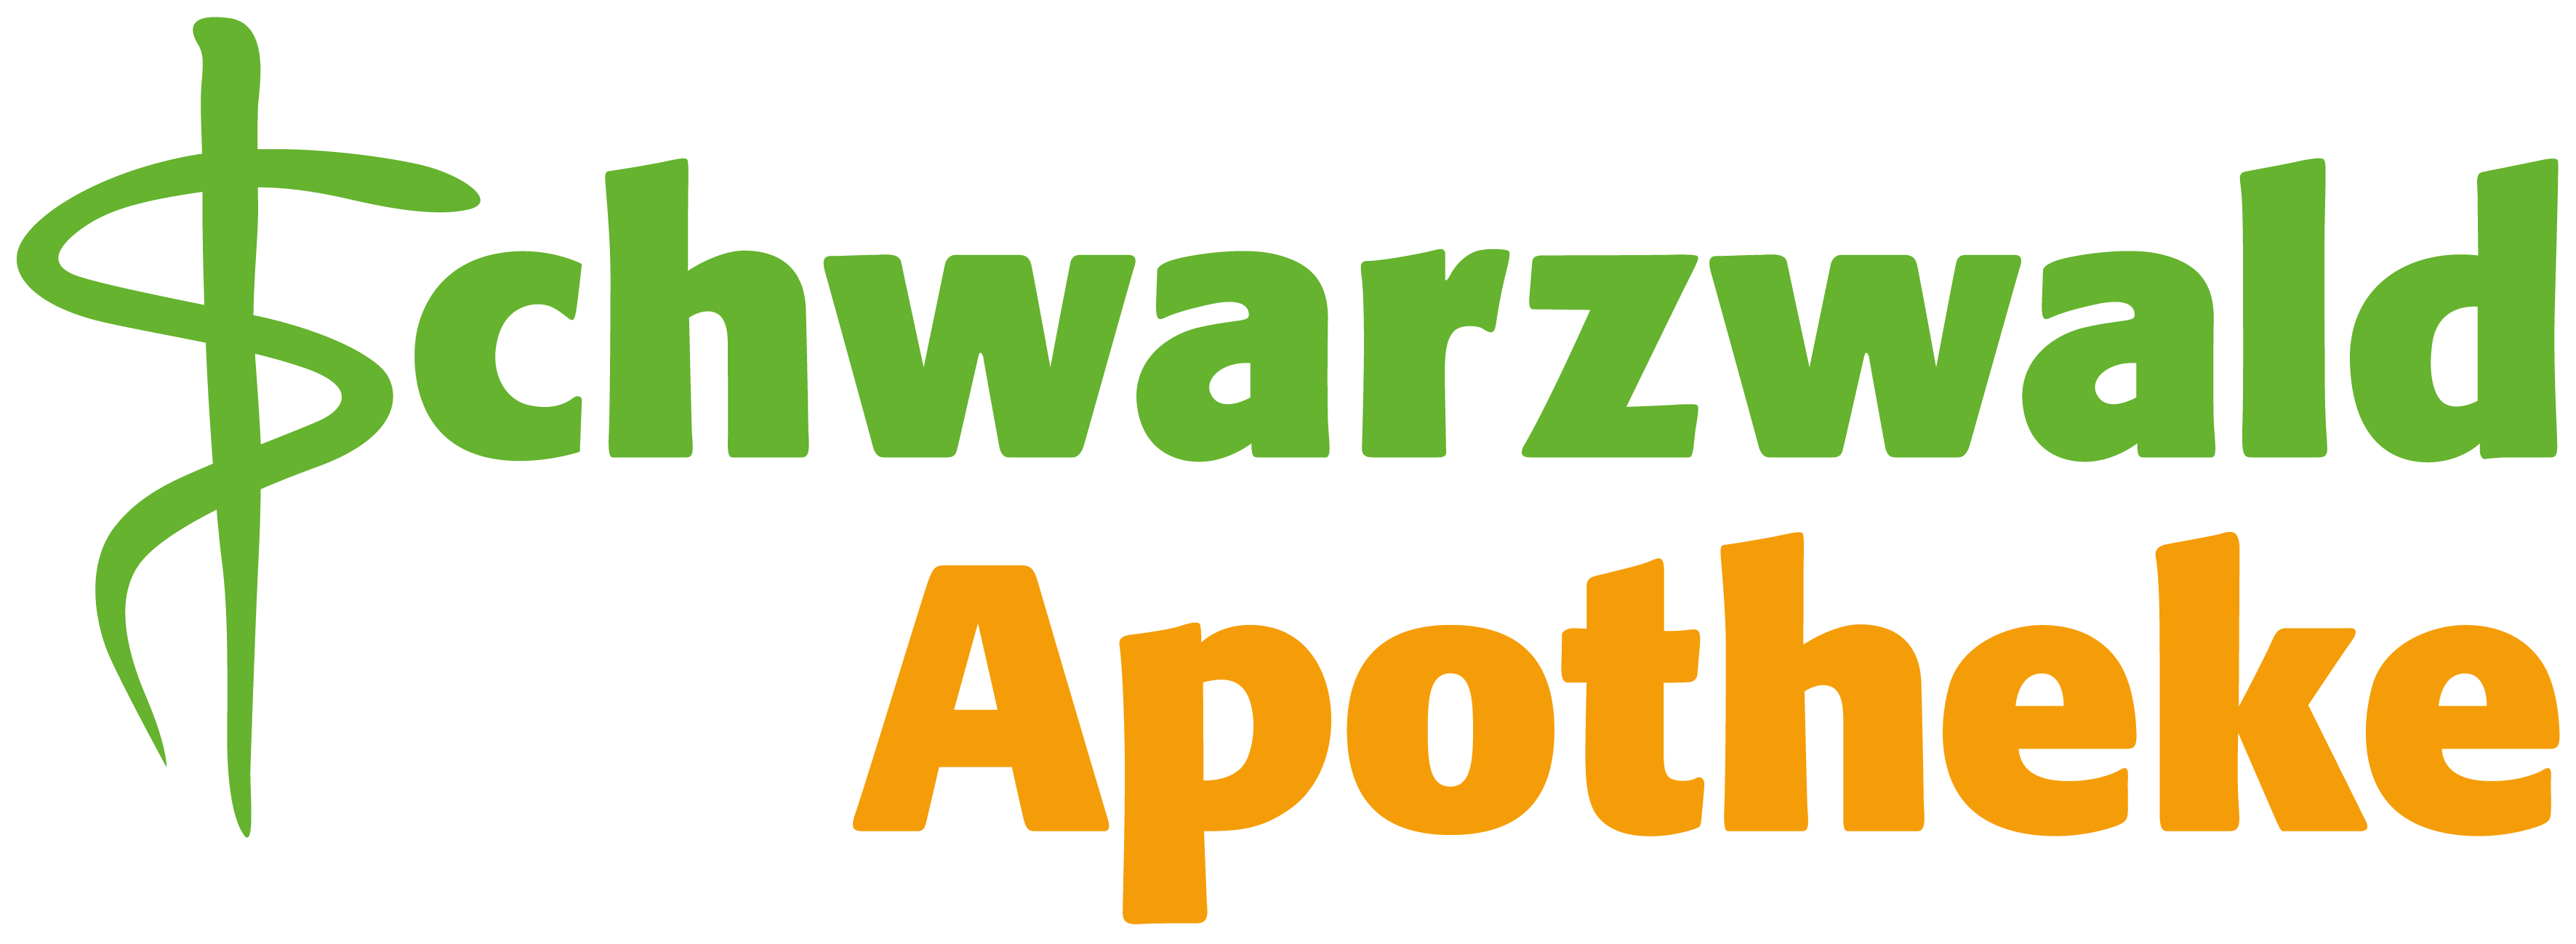 Schwarzwald-Apotheke